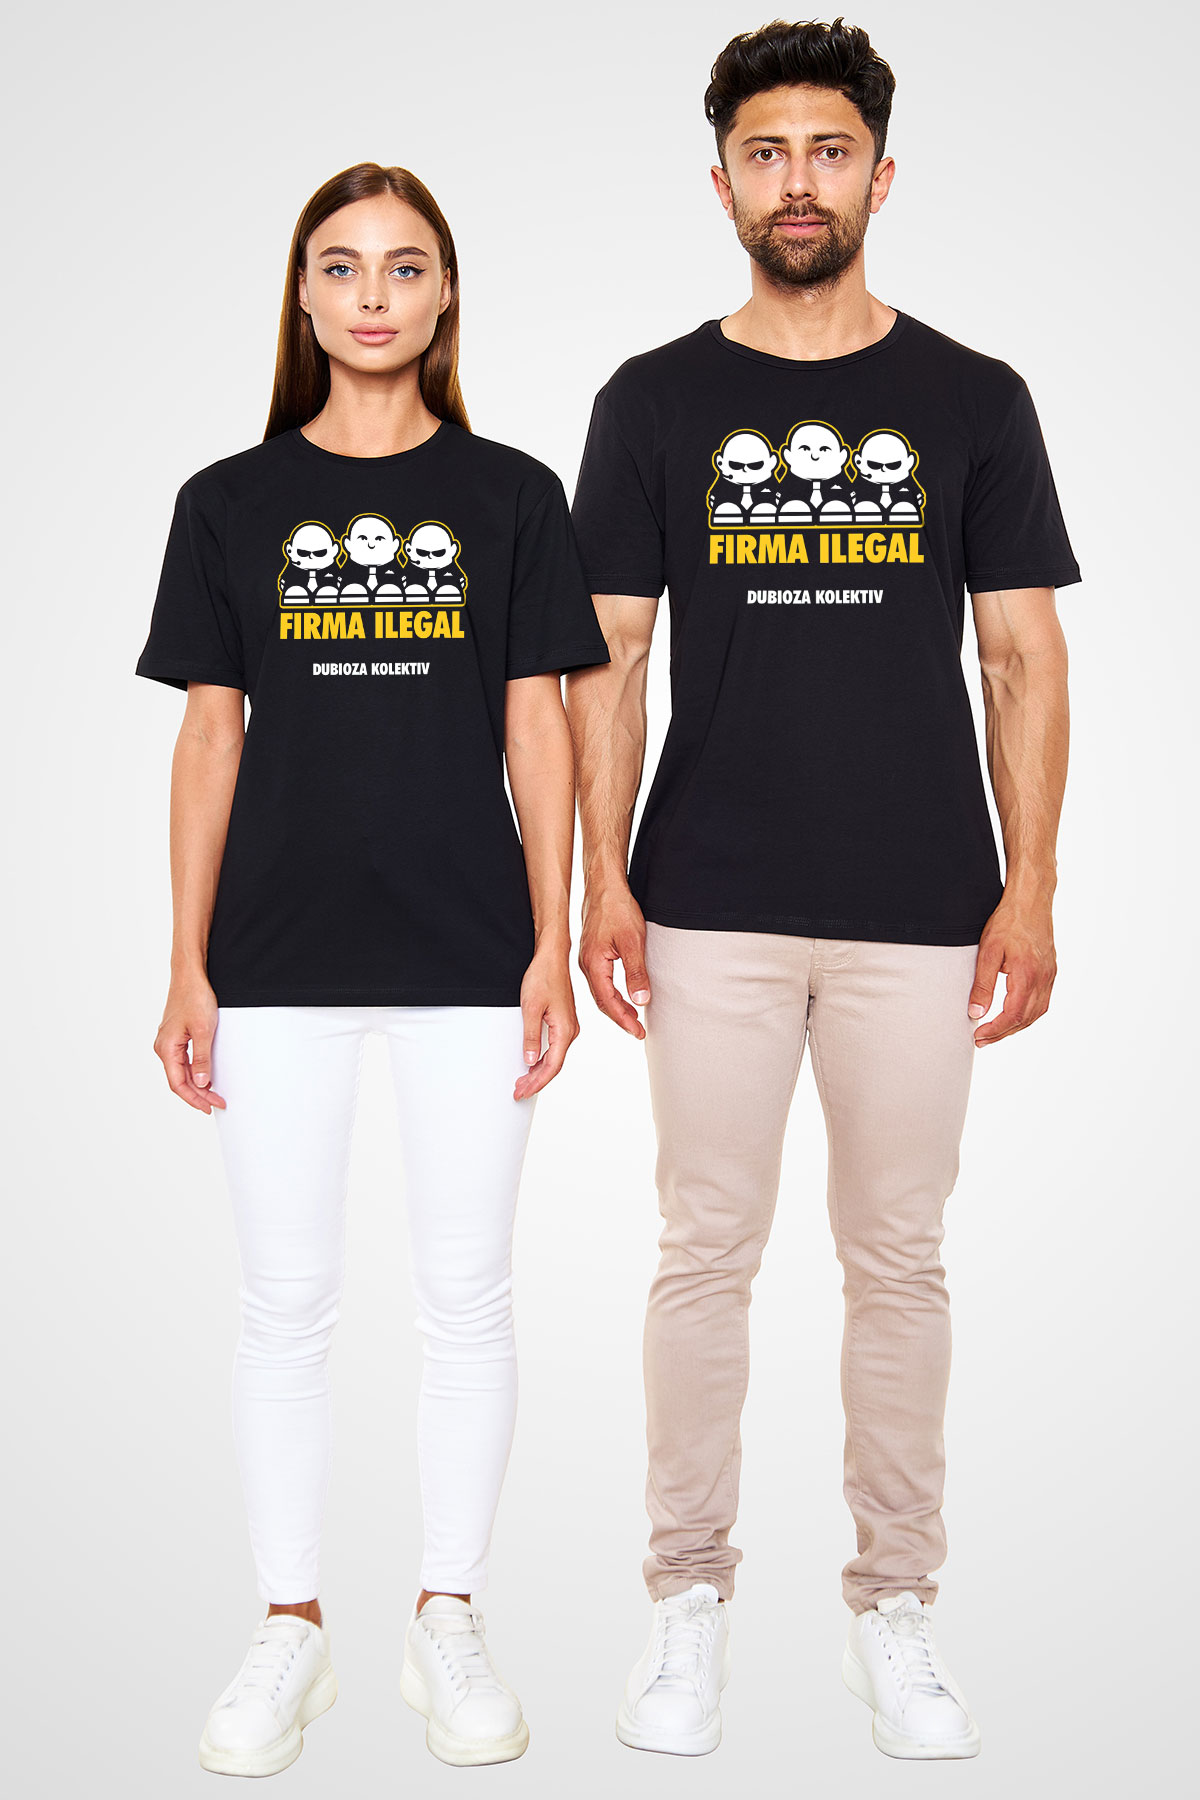 Dubioza kolektiv Black Unisex T-Shirt - Tees - Shirts